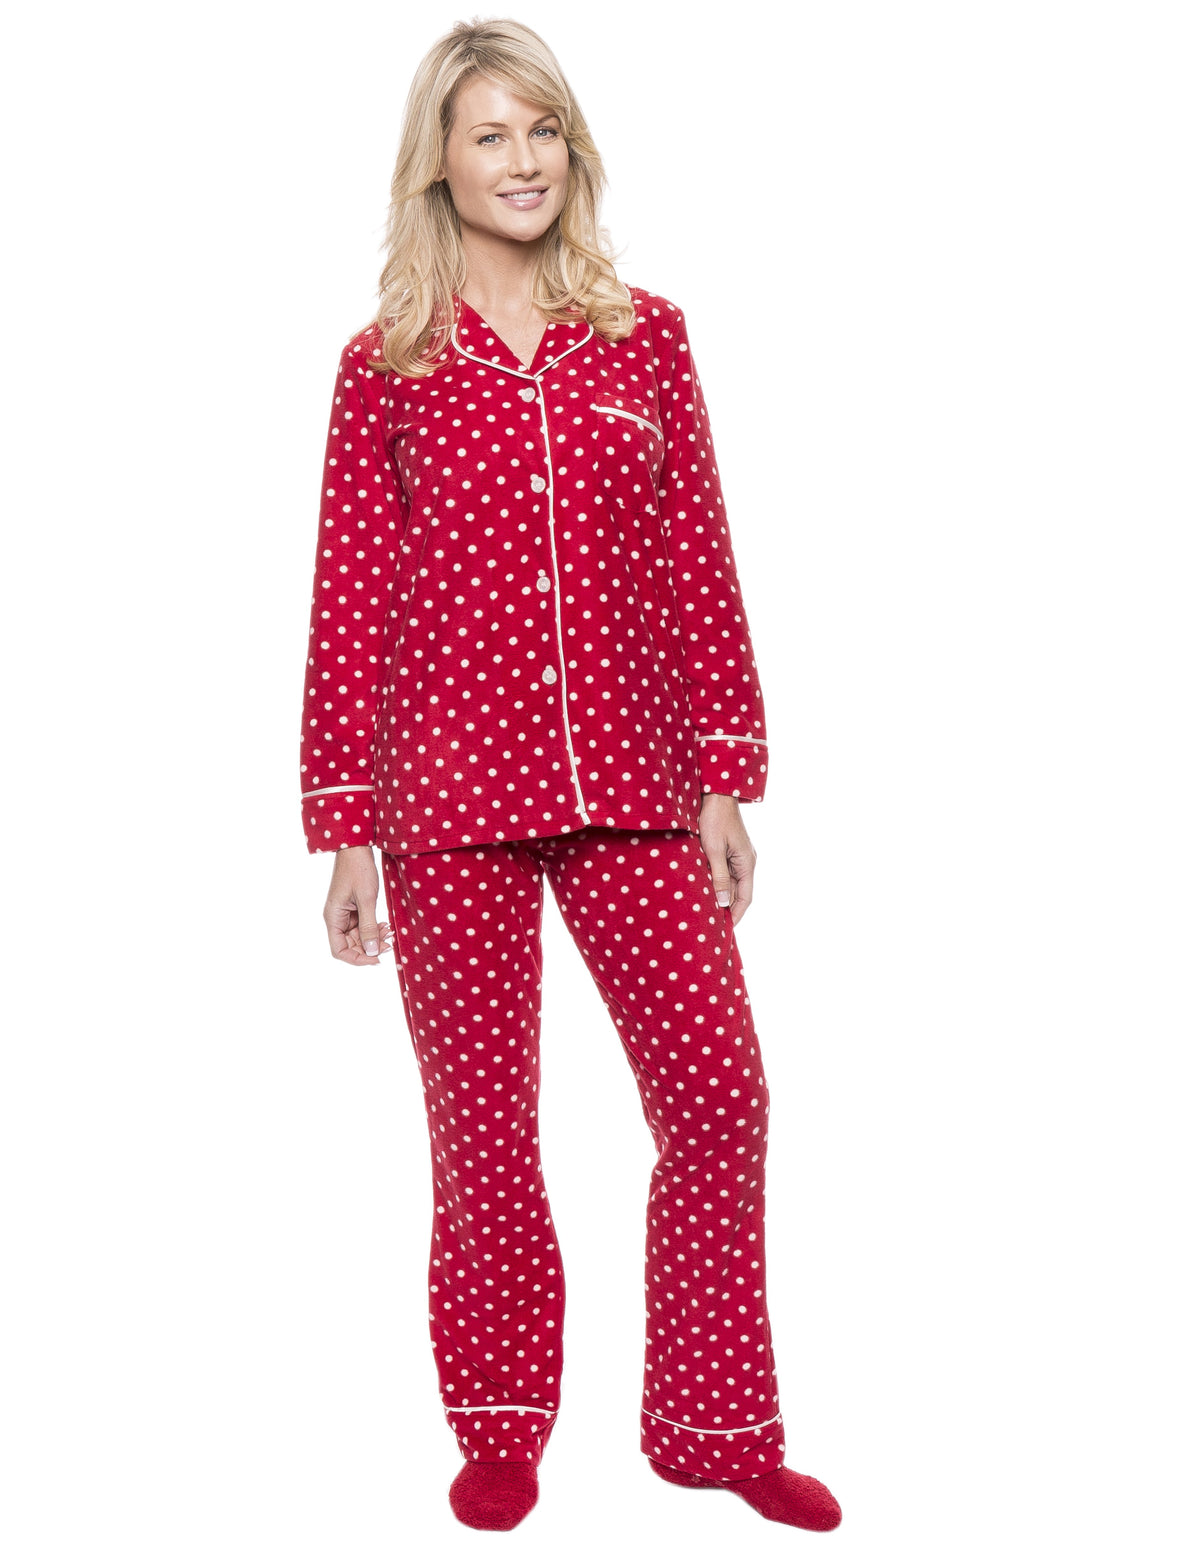 Womens Microfleece Pajama Sleepwear Set - Dots Diva Red/White